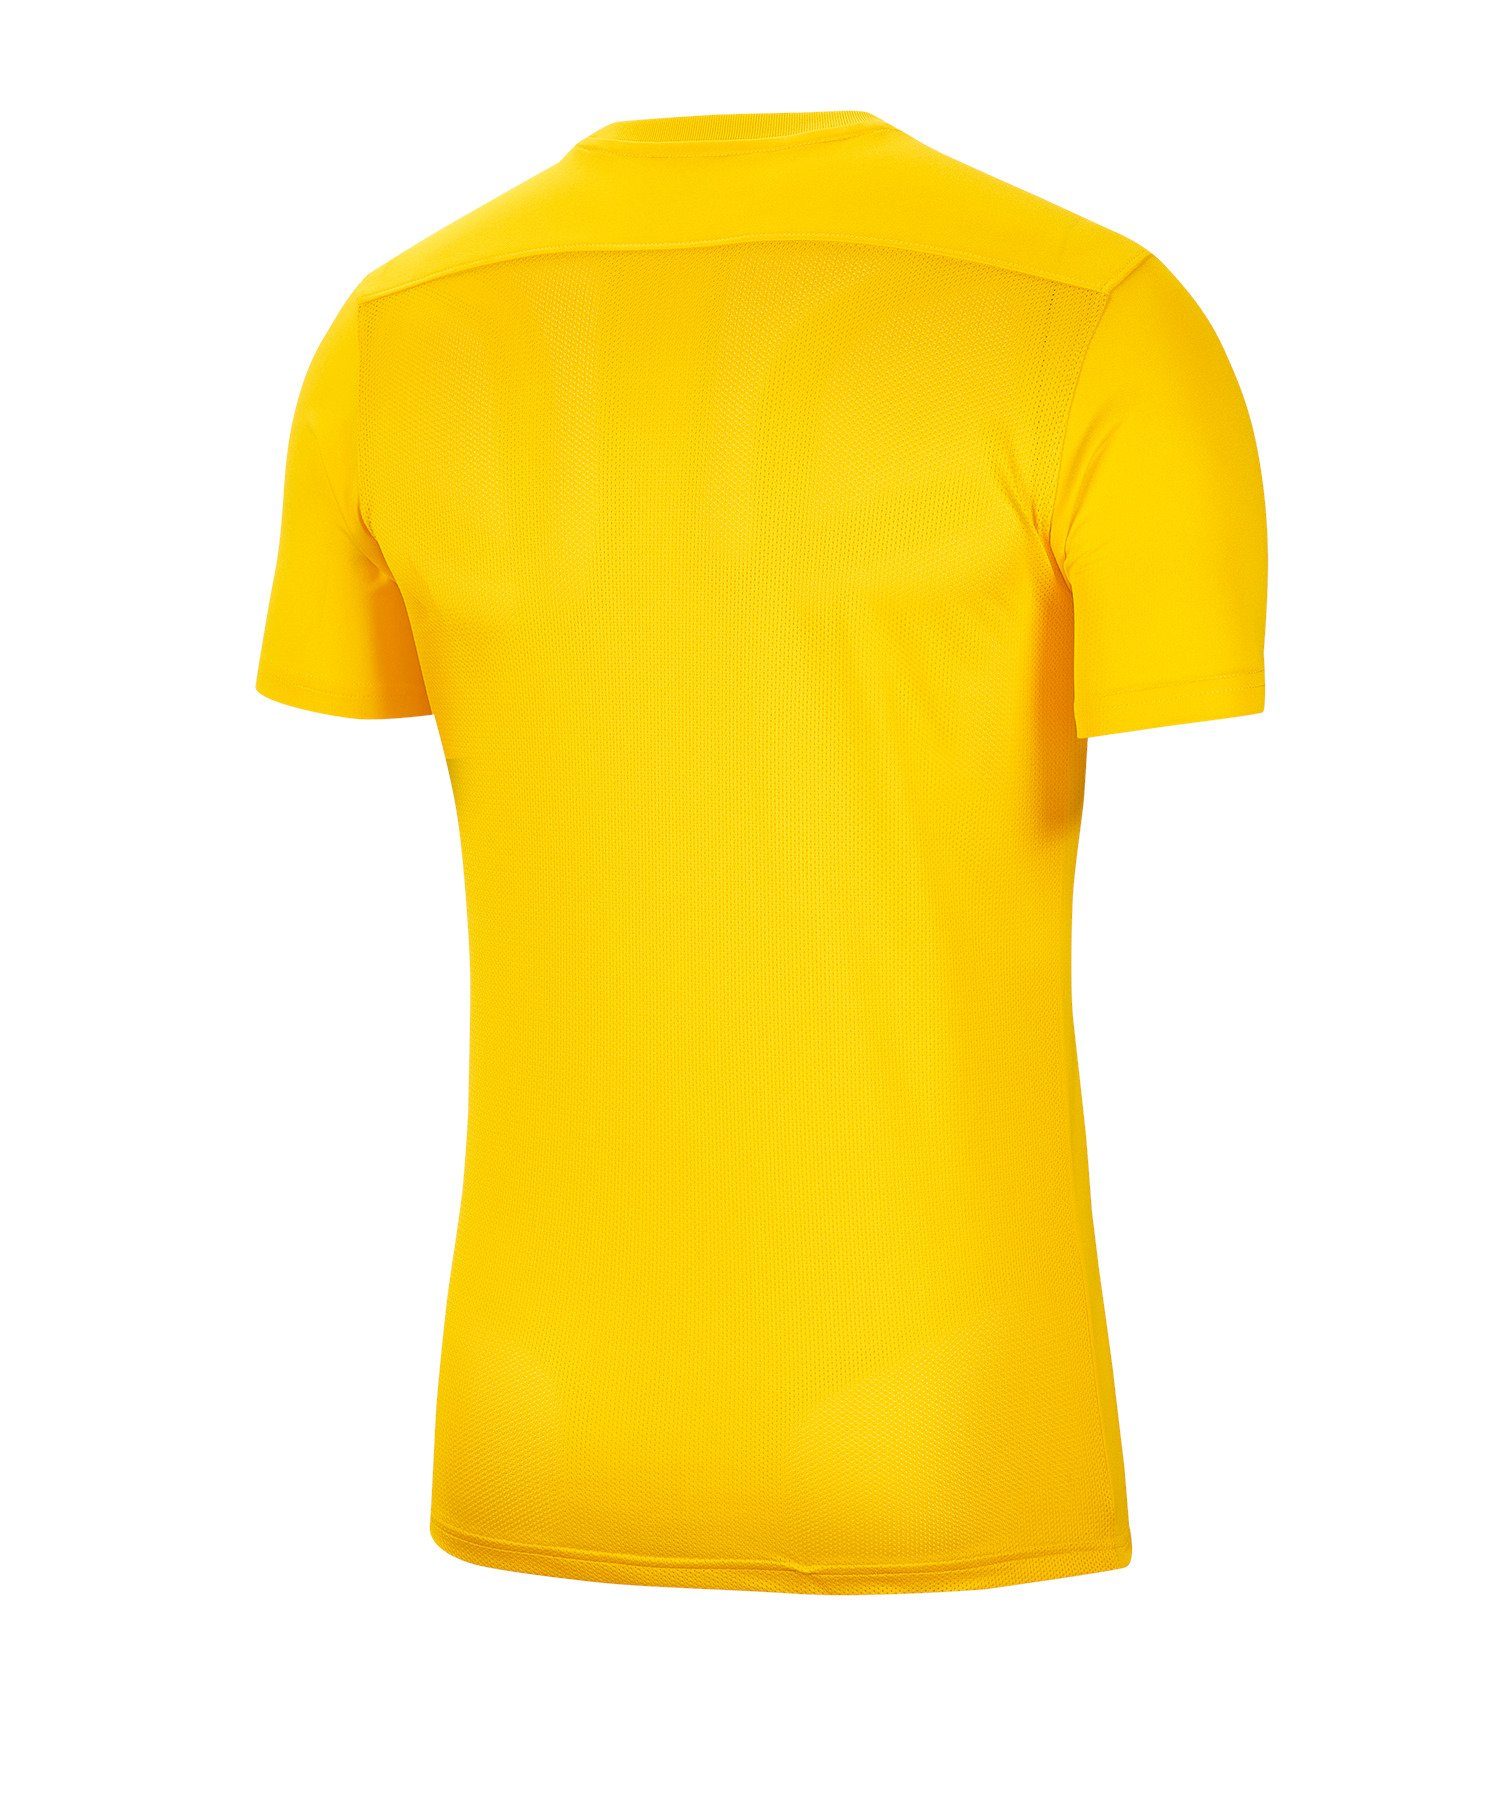 VII Nike kurzarm gelb Trikot Fußballtrikot Park